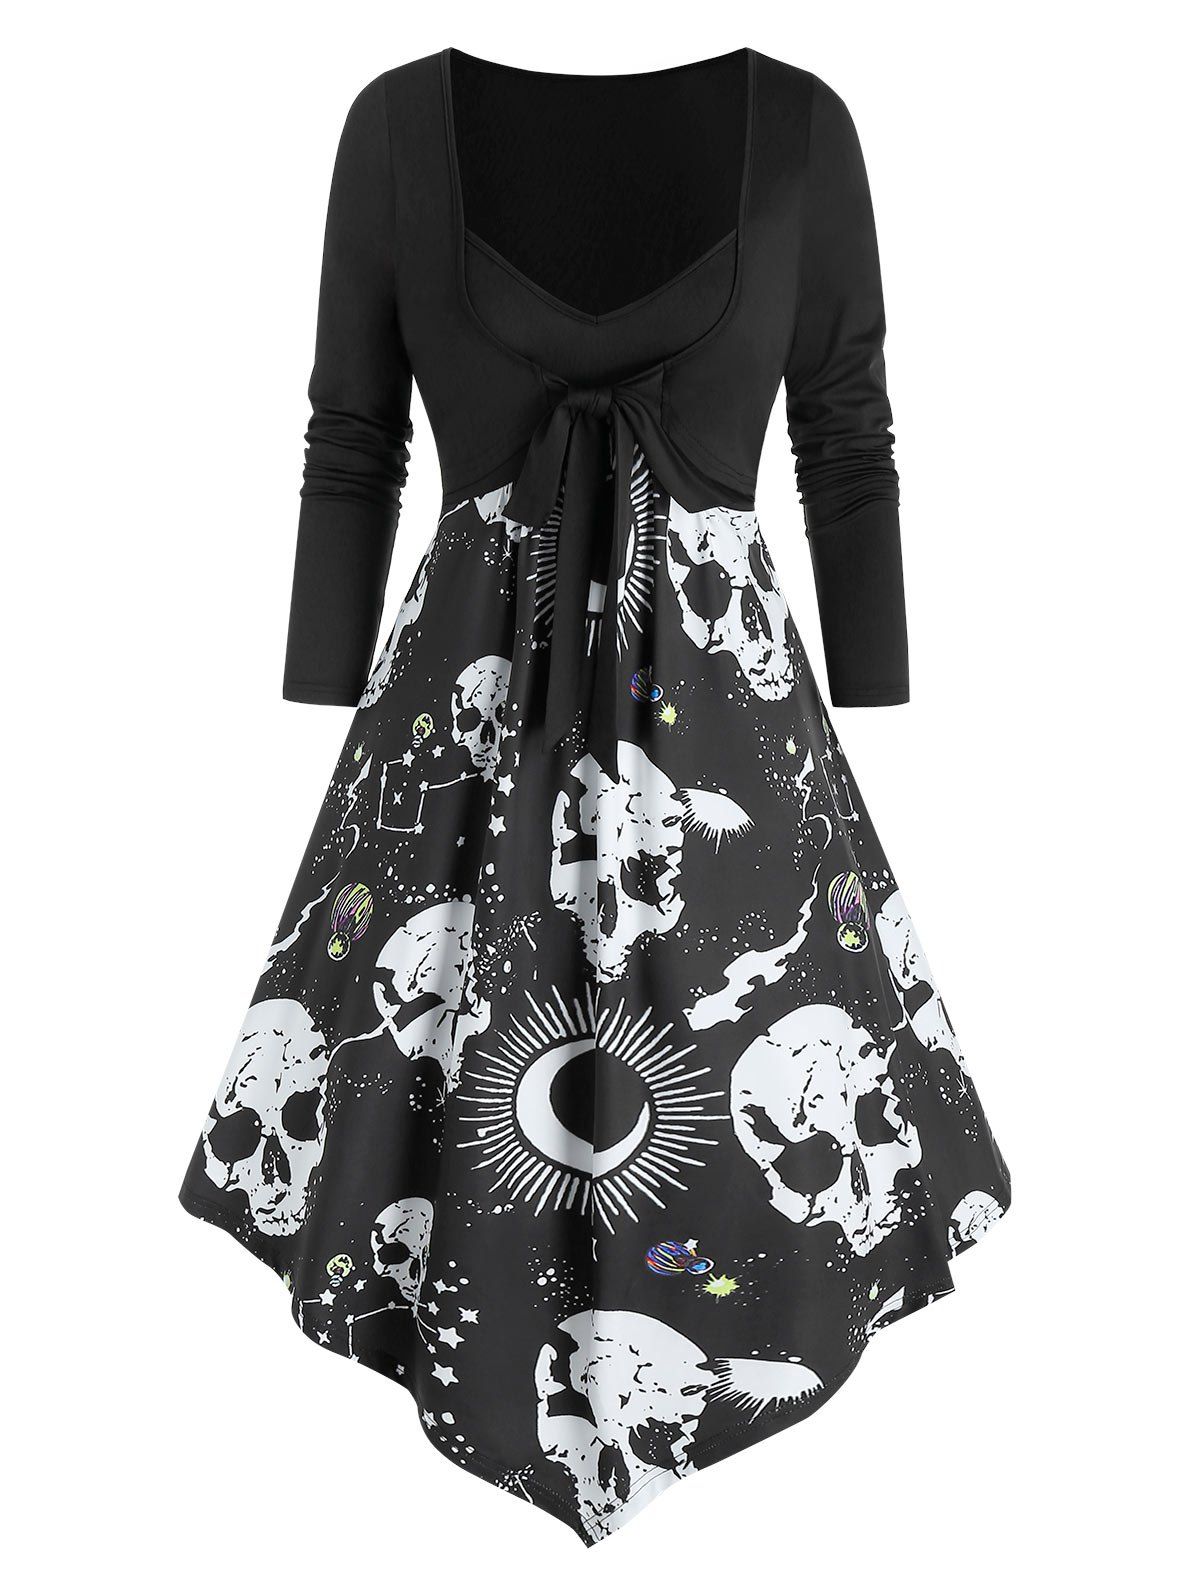 Skull Starry Print Faux Twinset Empire Waist Asymmetrical Dress - BLACK M